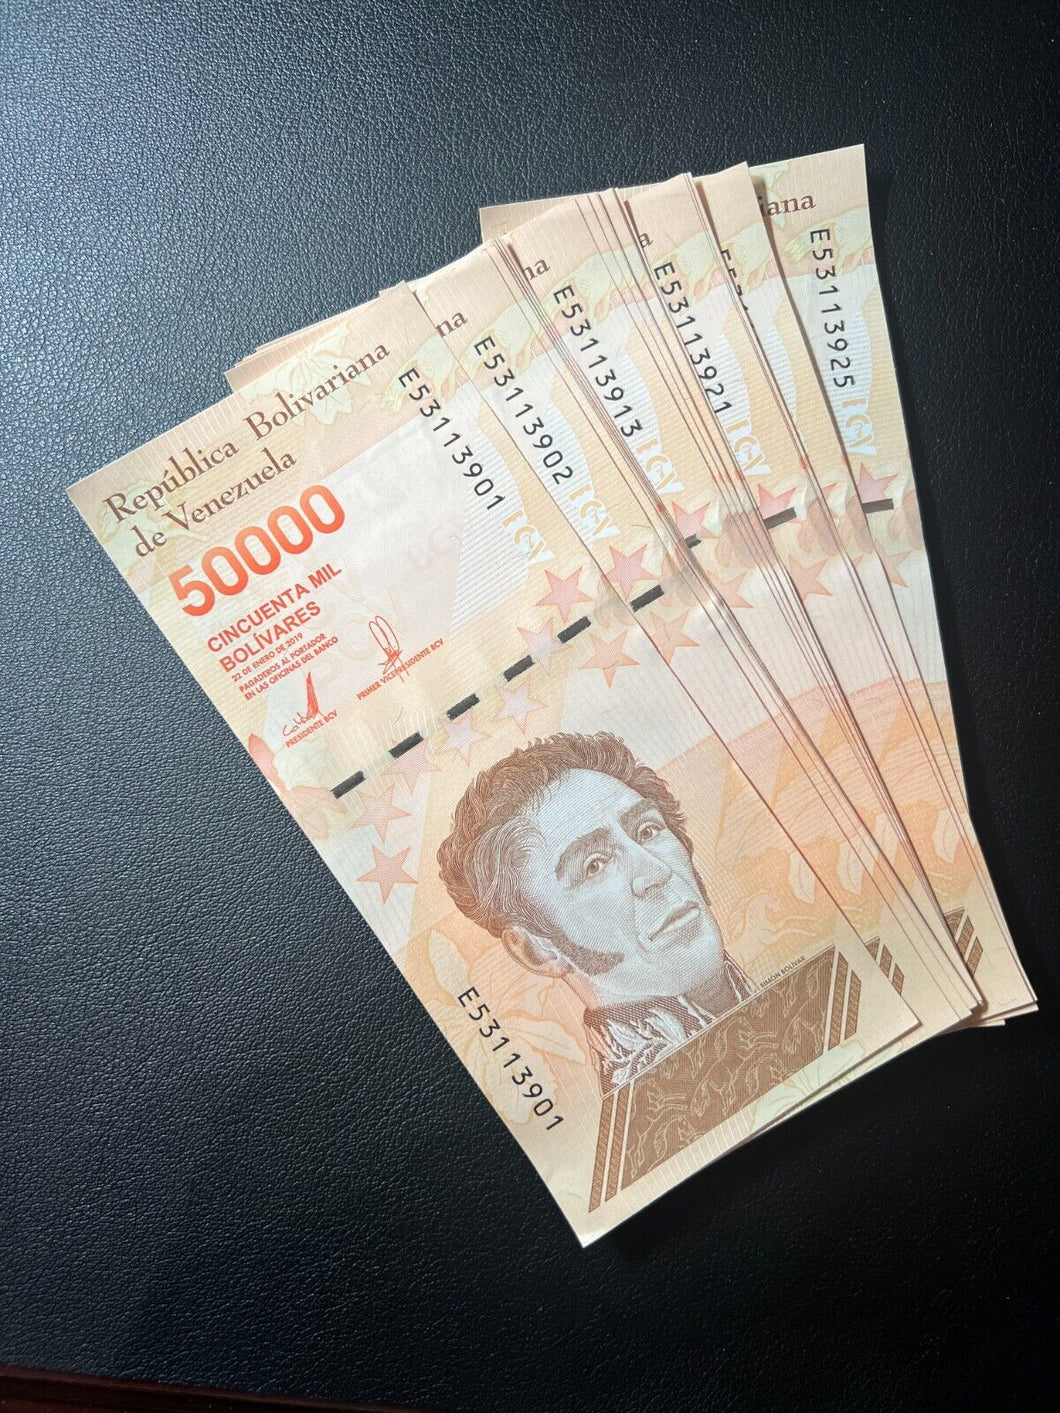 Venezuela 50000 (50,000) Bolivares Banknotes 2019 UNCIRCULATED - 25 Notes